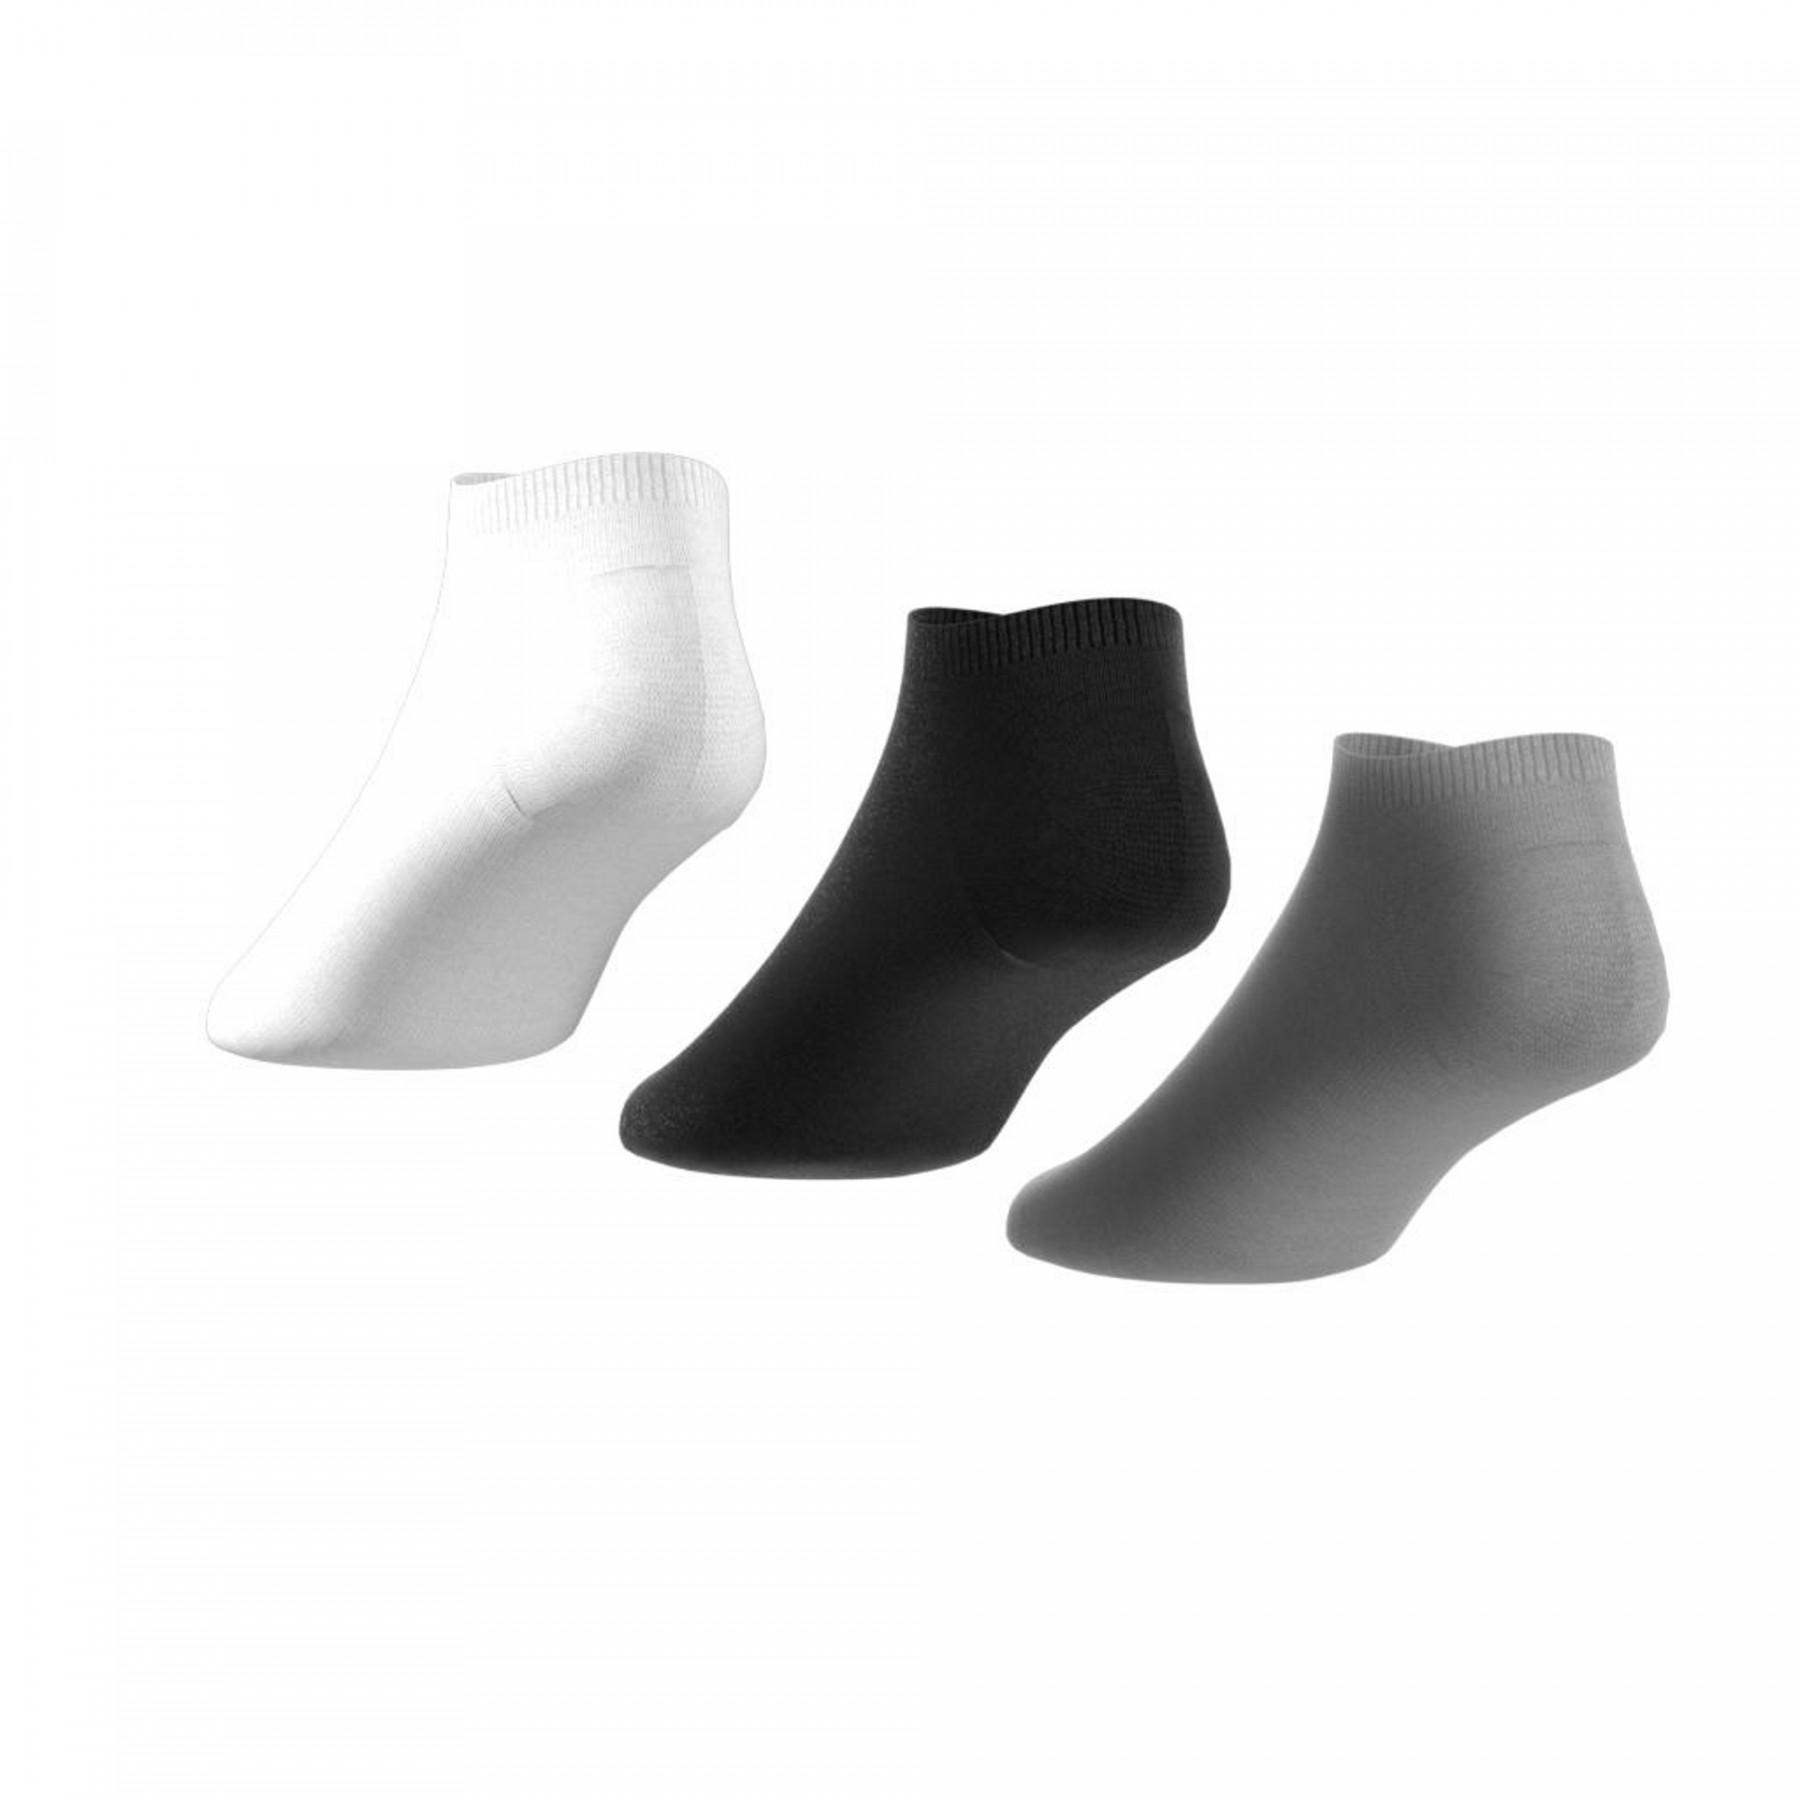 Socken adidas originals fines Trèfle (lot de 3 paires)